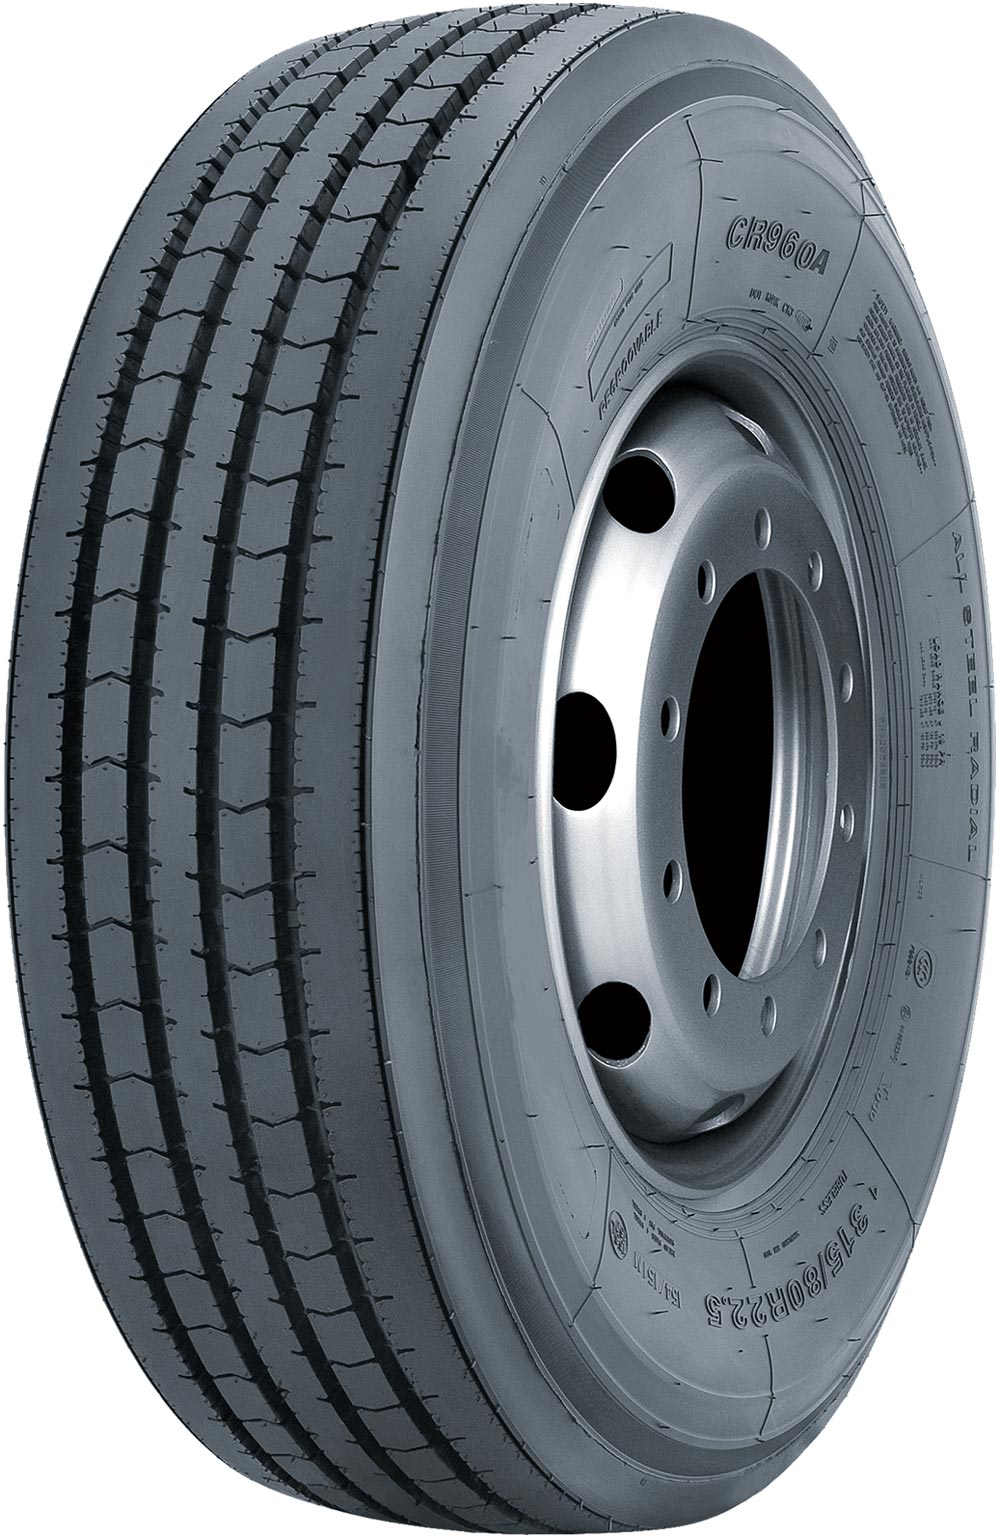 product_type-heavy_tires GOODRIDE CR960A 14PR 215/75 R17.5 128P